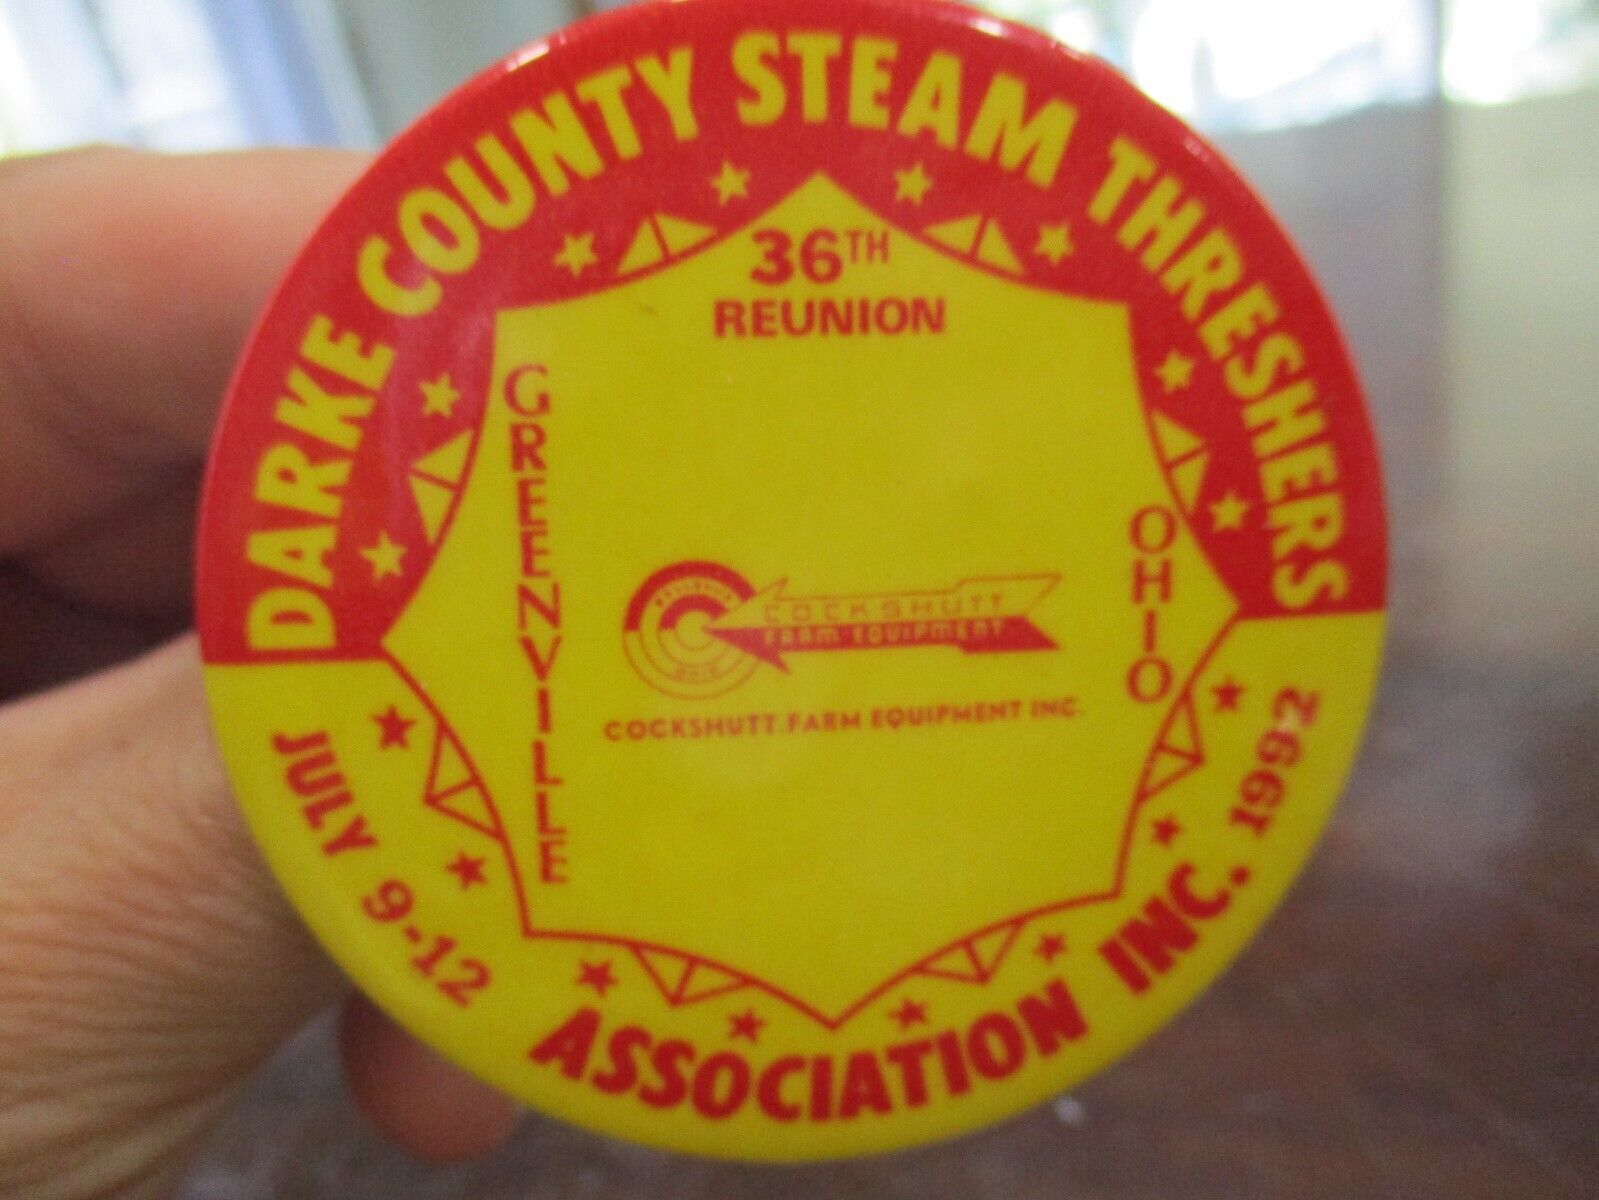 Drake County Steam Threshers 36th Reunion Cockshutt Farm Equipment Inc.1992 pin